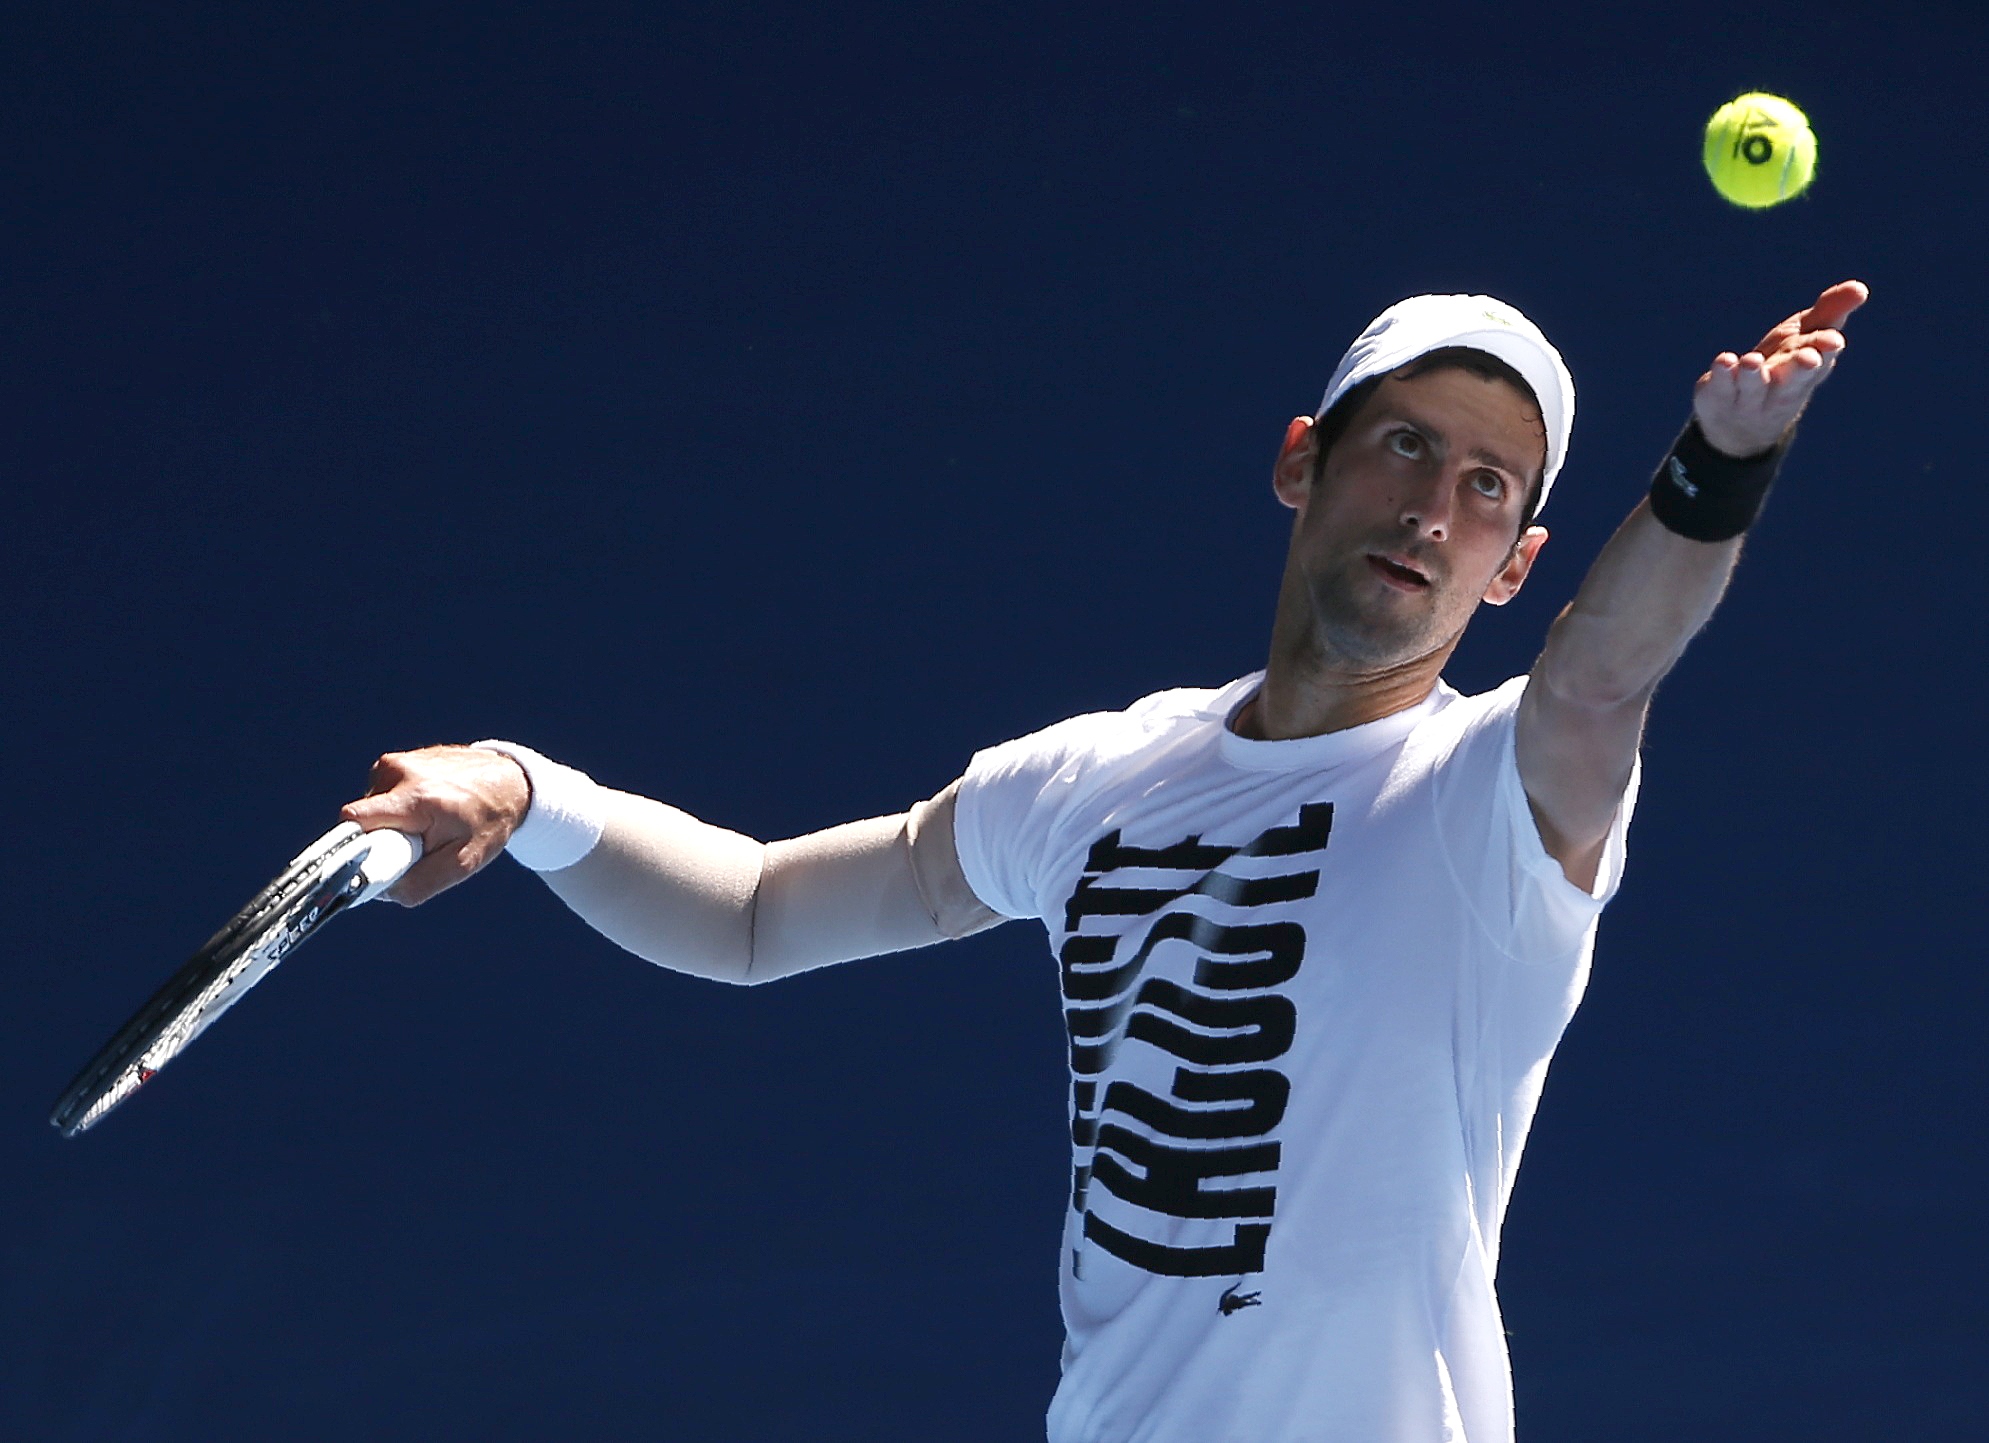 Tennis: Djokovic dismisses talk of boycott over prize money